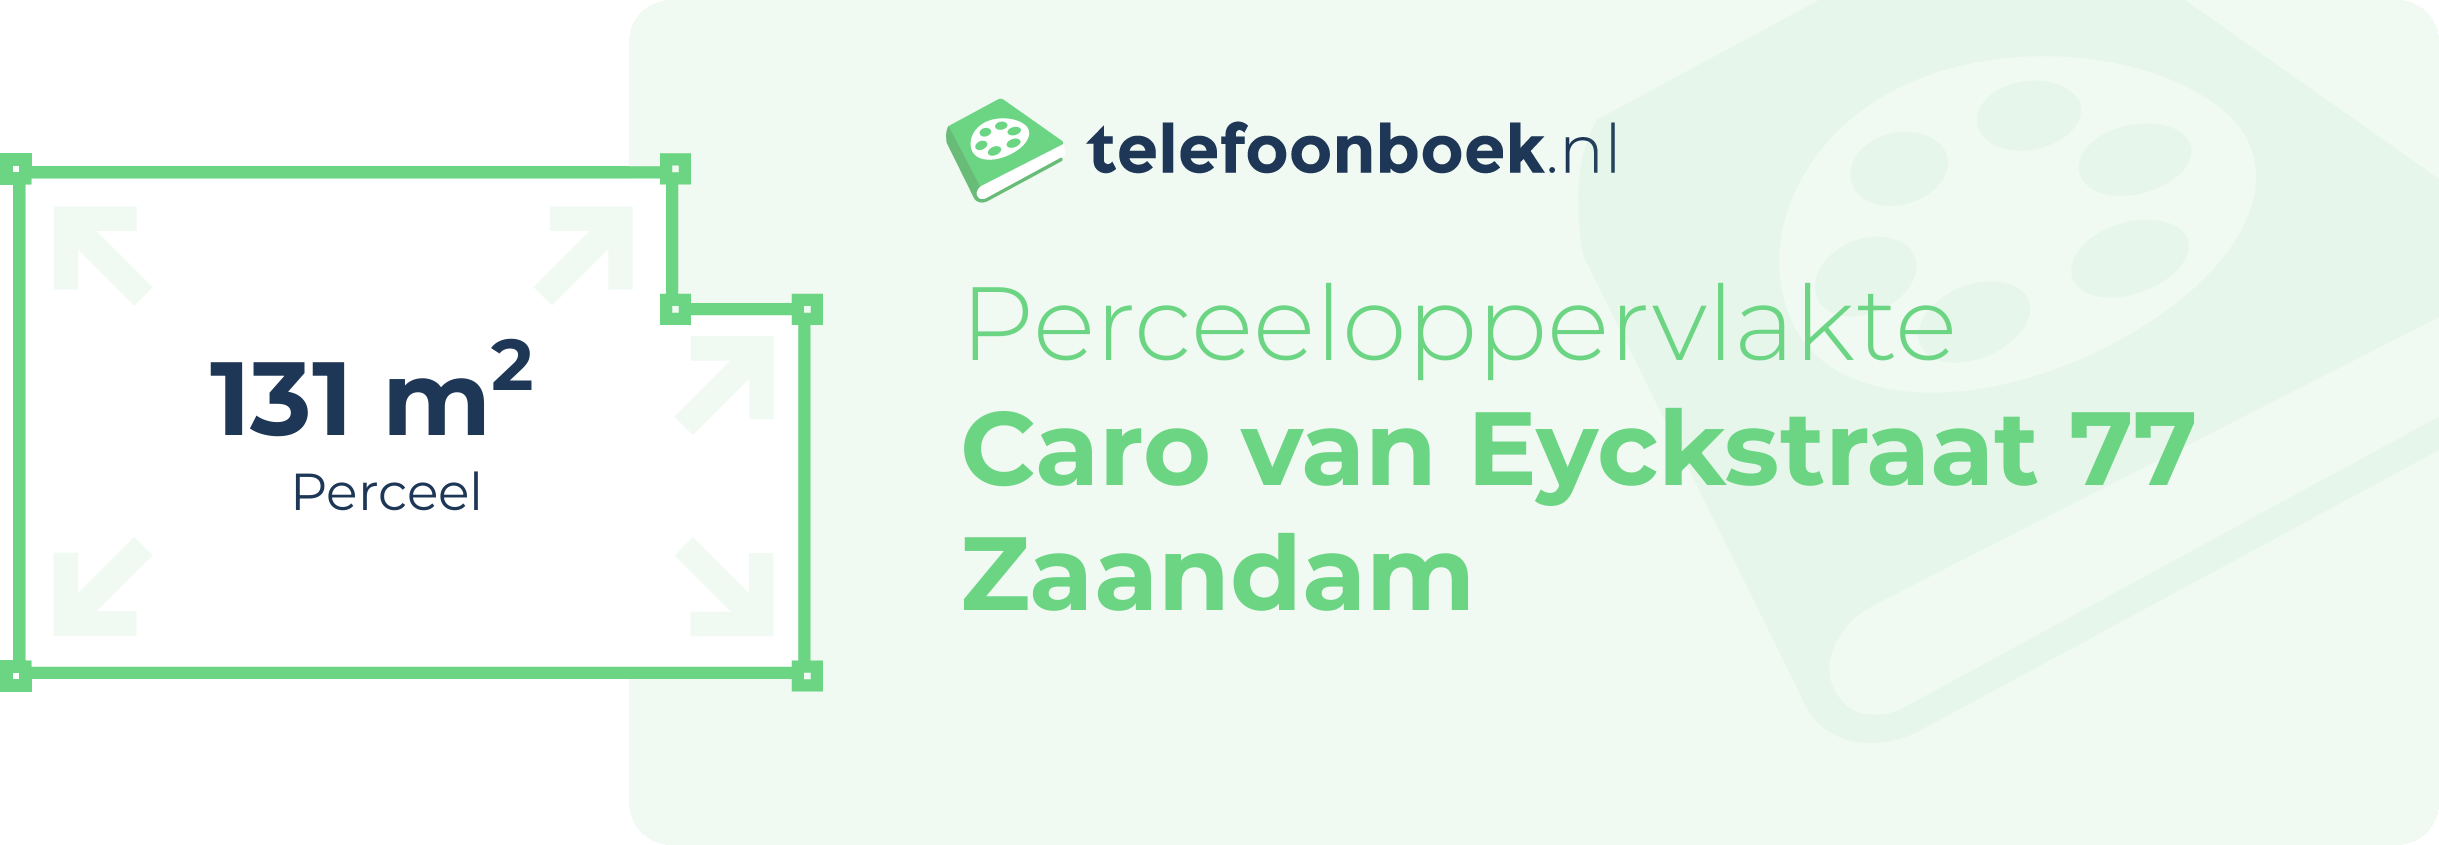 Perceeloppervlakte Caro Van Eyckstraat 77 Zaandam